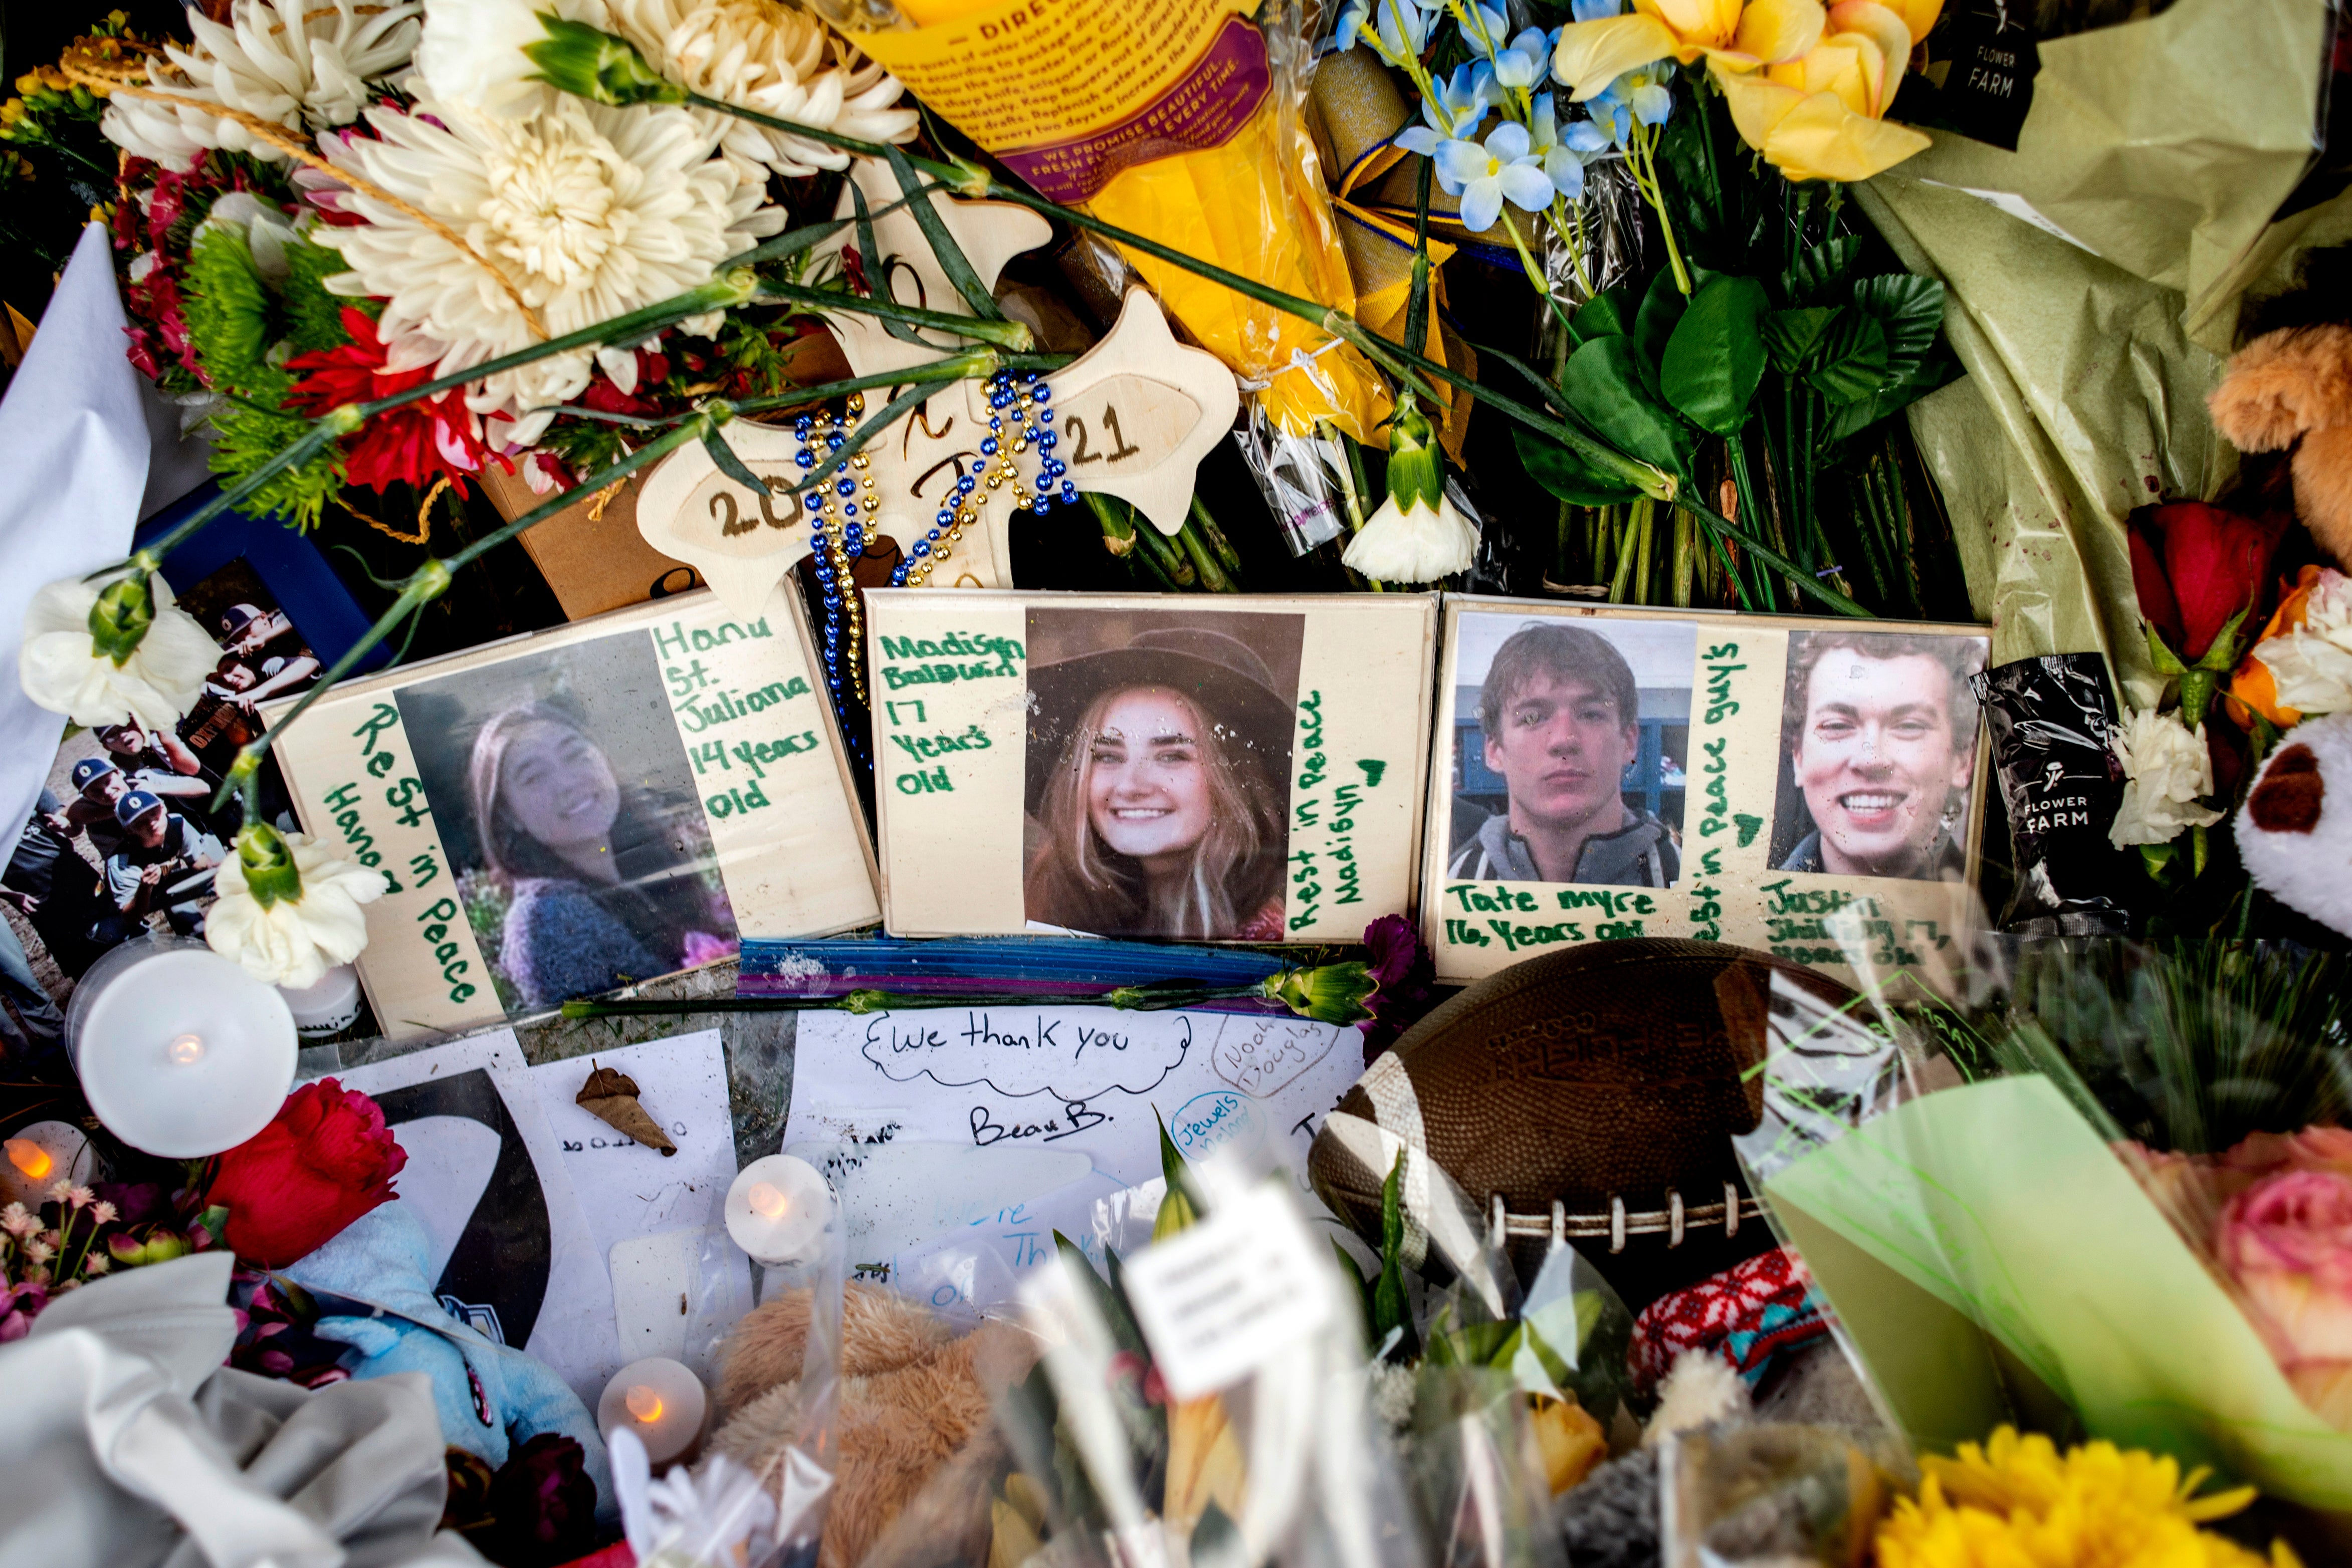 Hana St. Juliana, 14, Madisyn Baldwin, 17, Tate Myre, 16 and Justin Shilling, 17, are seen in photos at a memorial